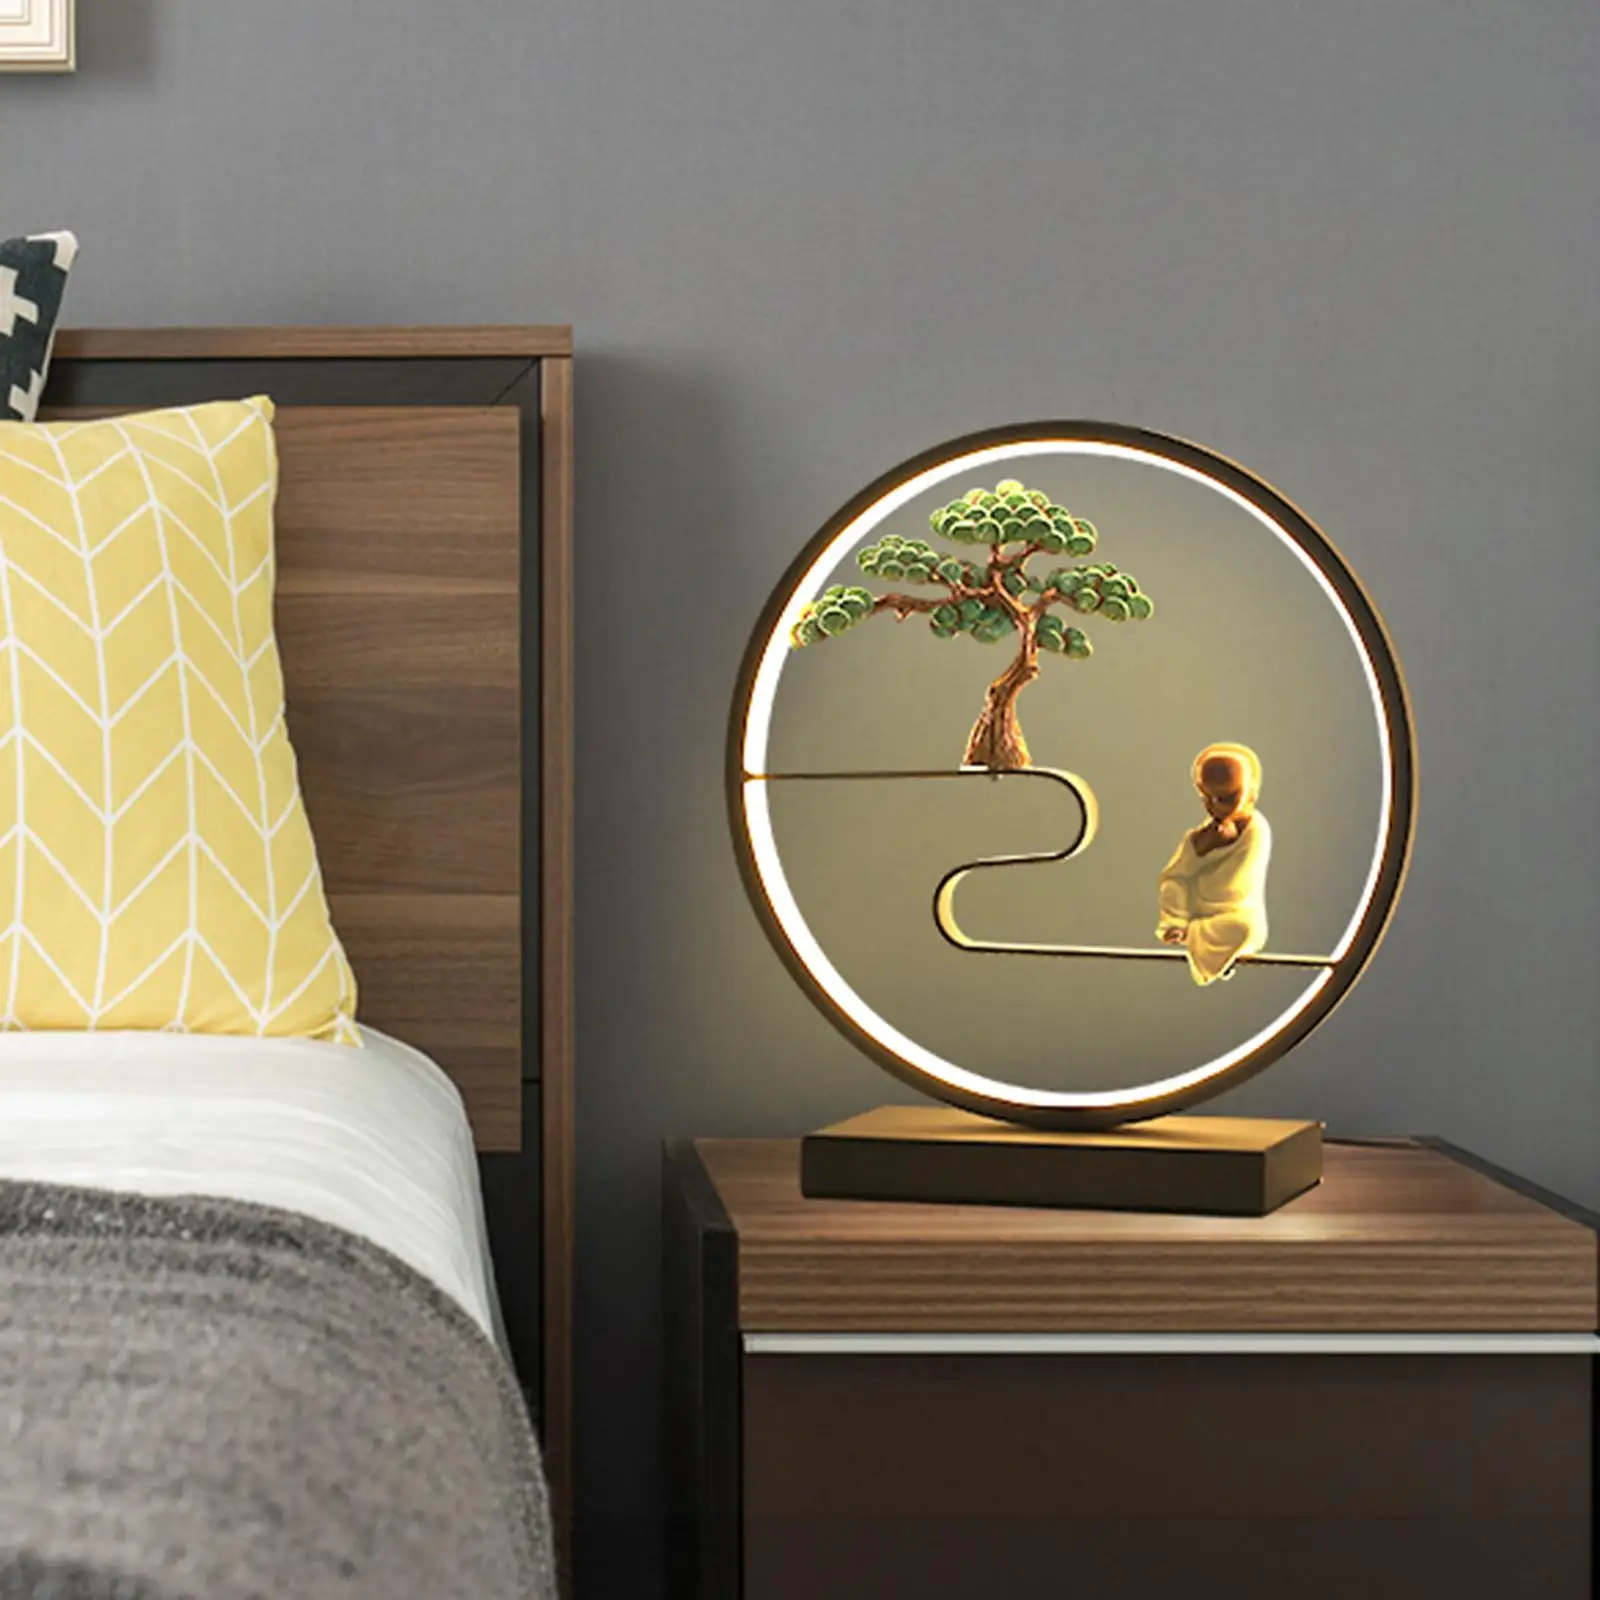 Bedroom Bedside Night Home Decoration Desktop Ornament Housewarmging Gift LED NightStand Lamp